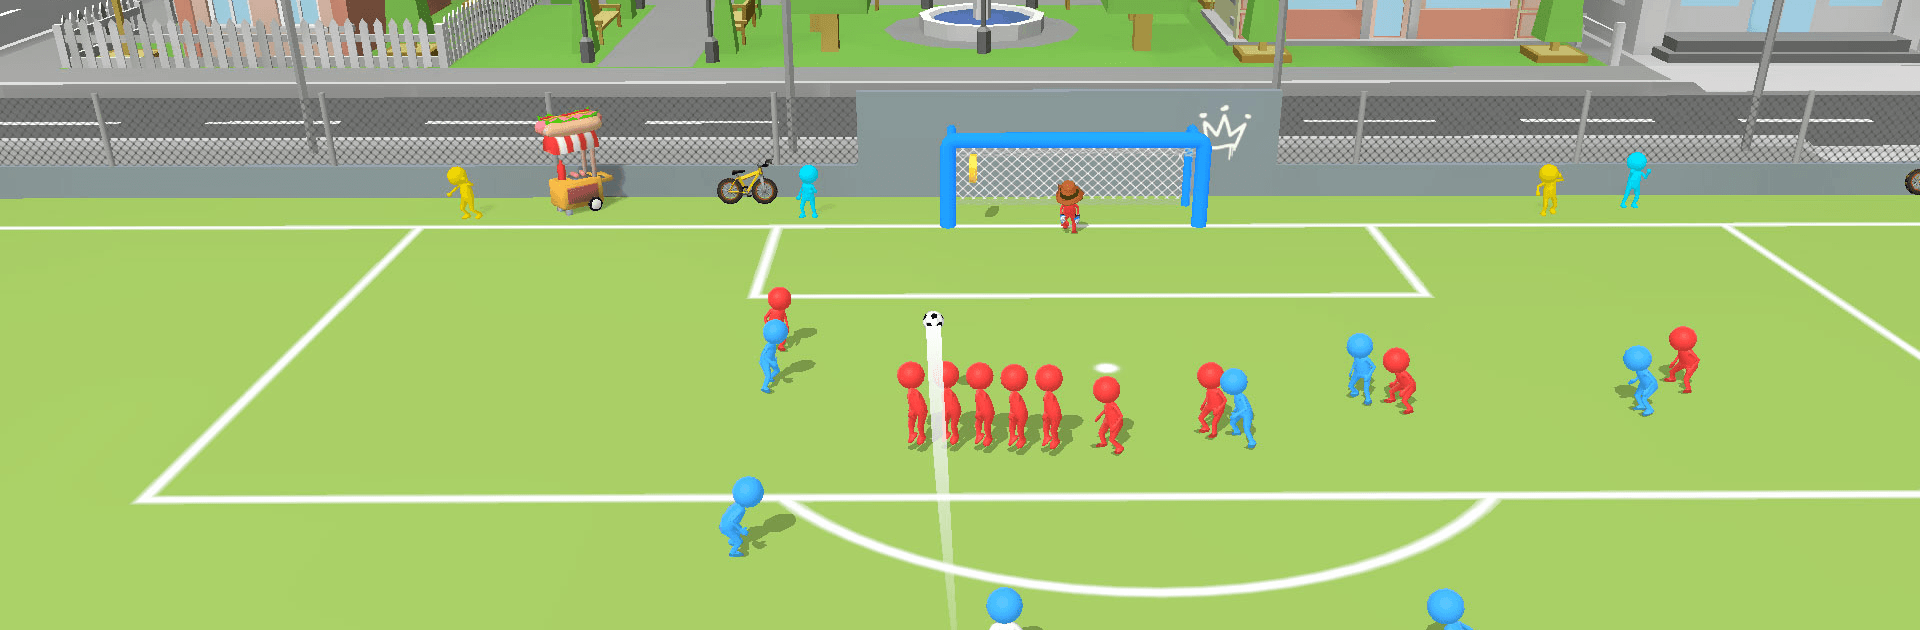 Super Goal - Người que đá bóng